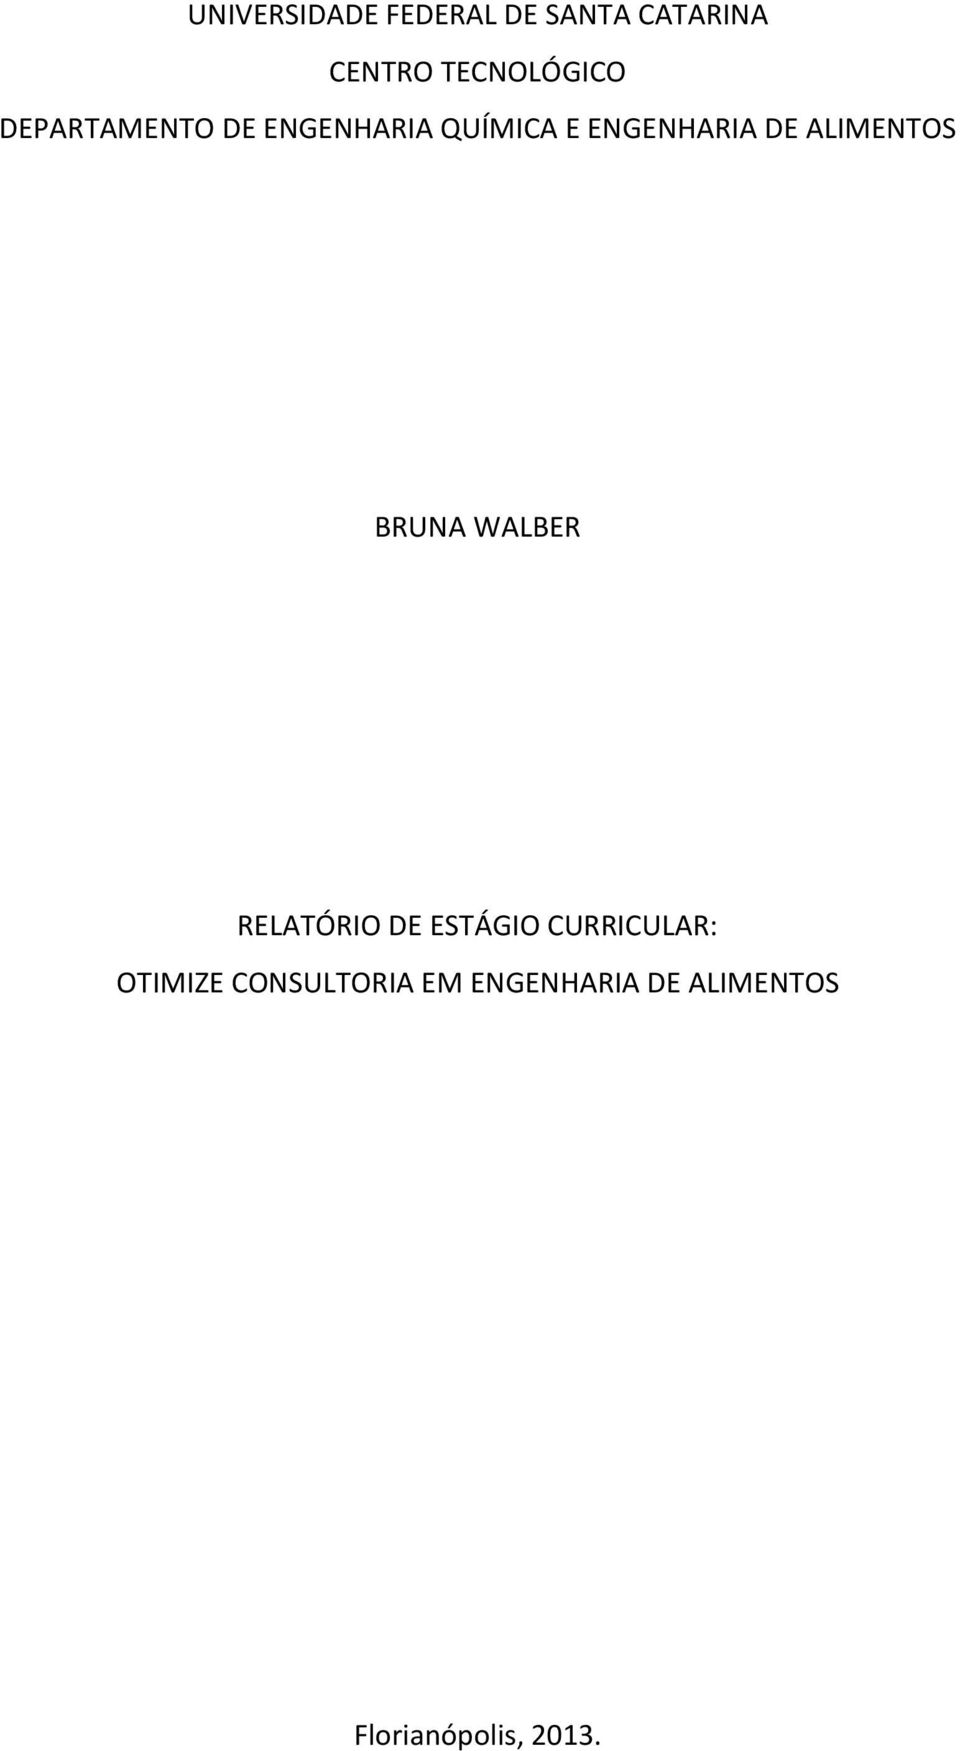 ALIMENTOS BRUNA WALBER RELATÓRIO DE ESTÁGIO CURRICULAR: